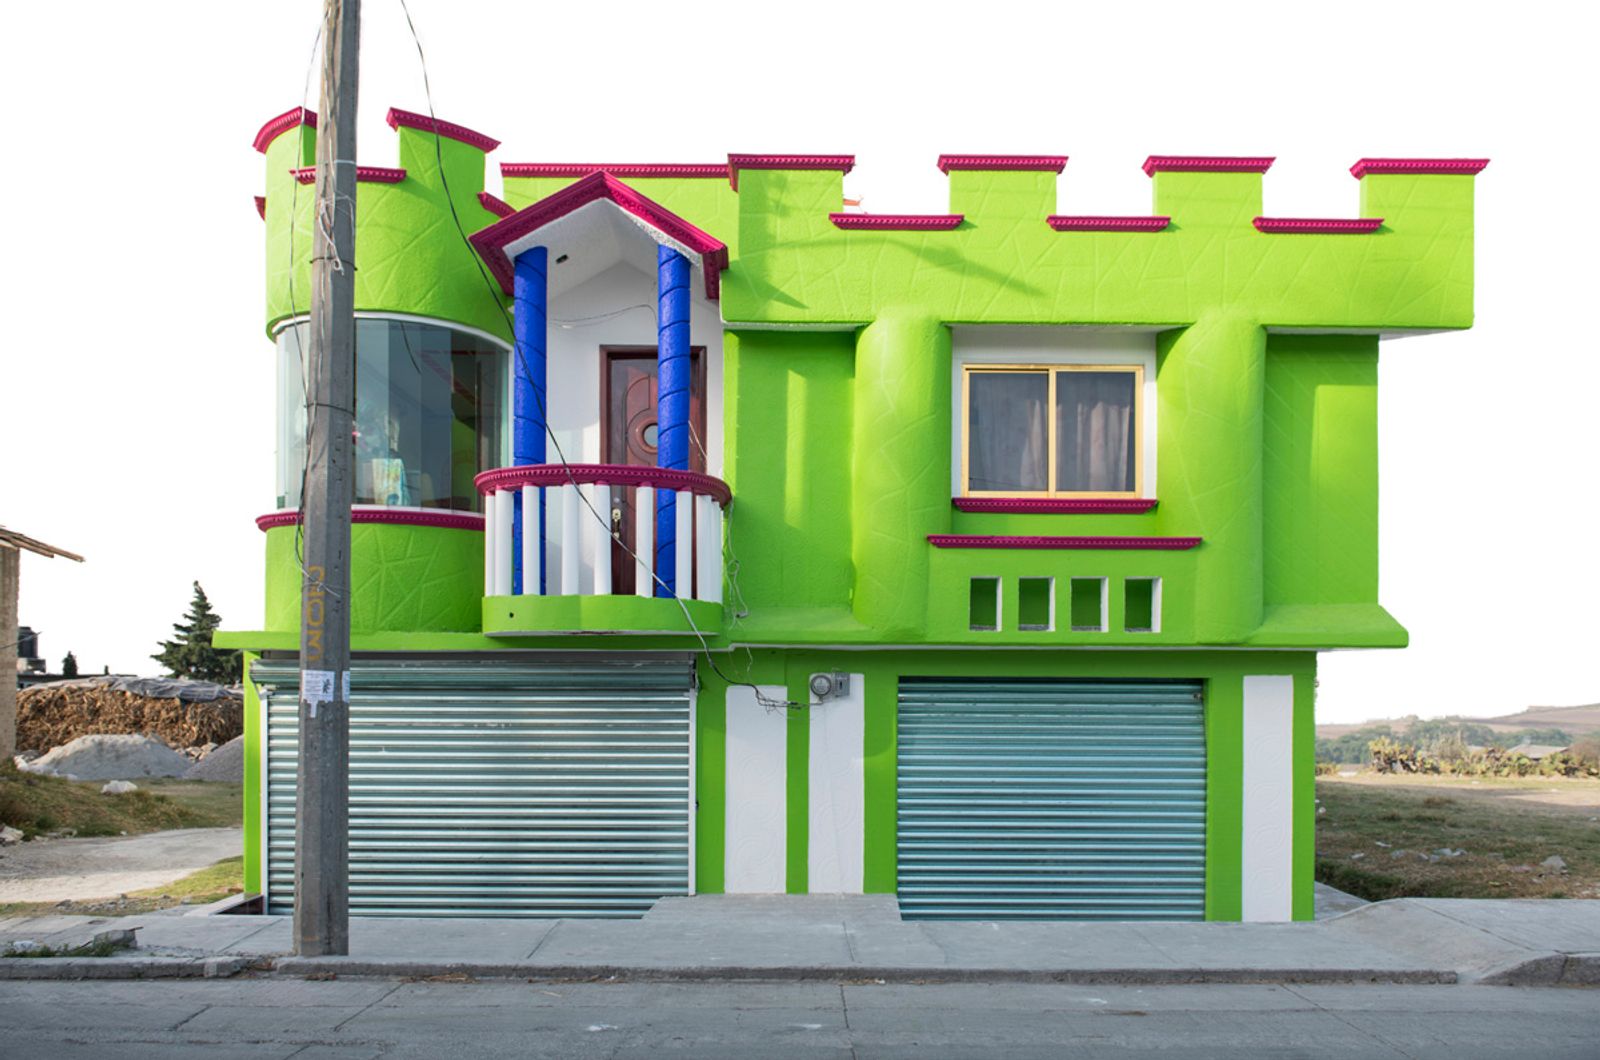 © Adam Wiseman - Image from the Arquitectura libre, exhibición a domicilio photography project